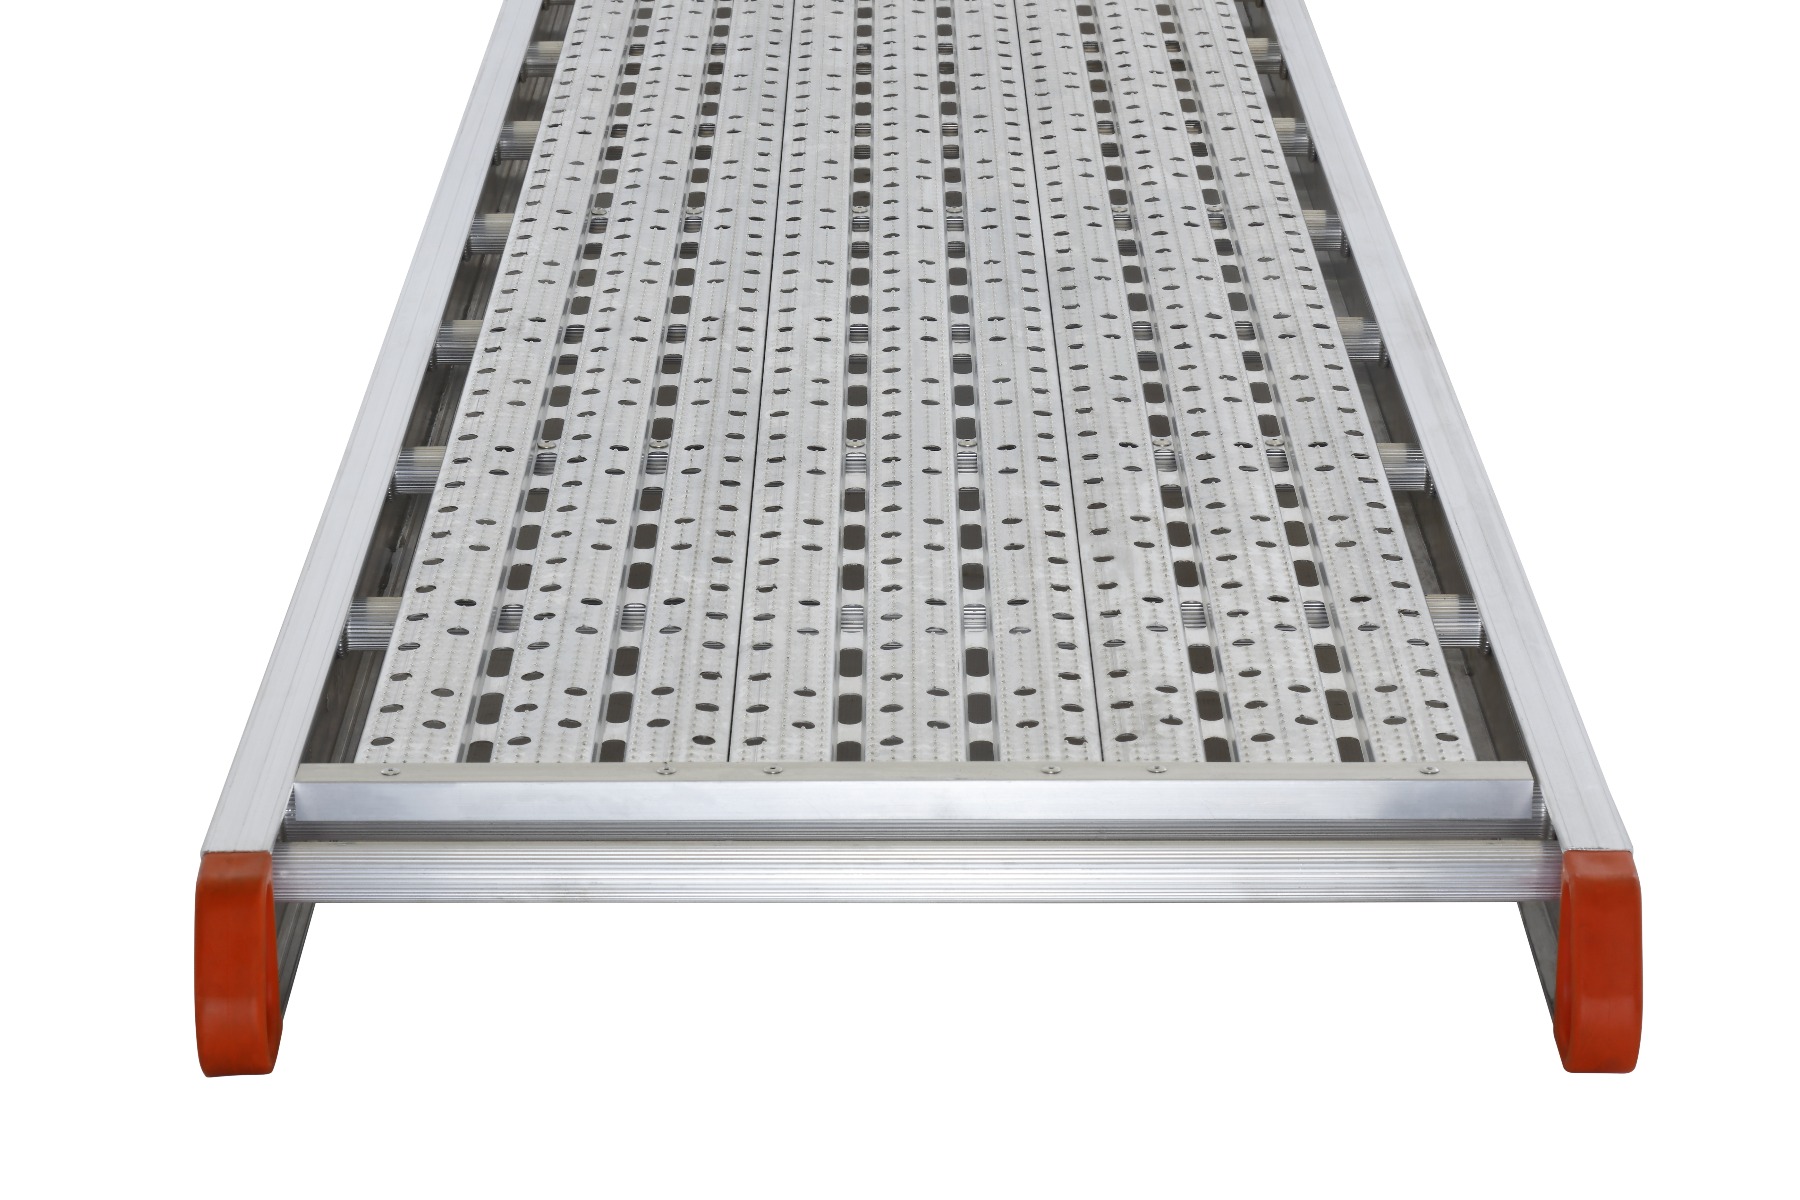 aluminum walk plank